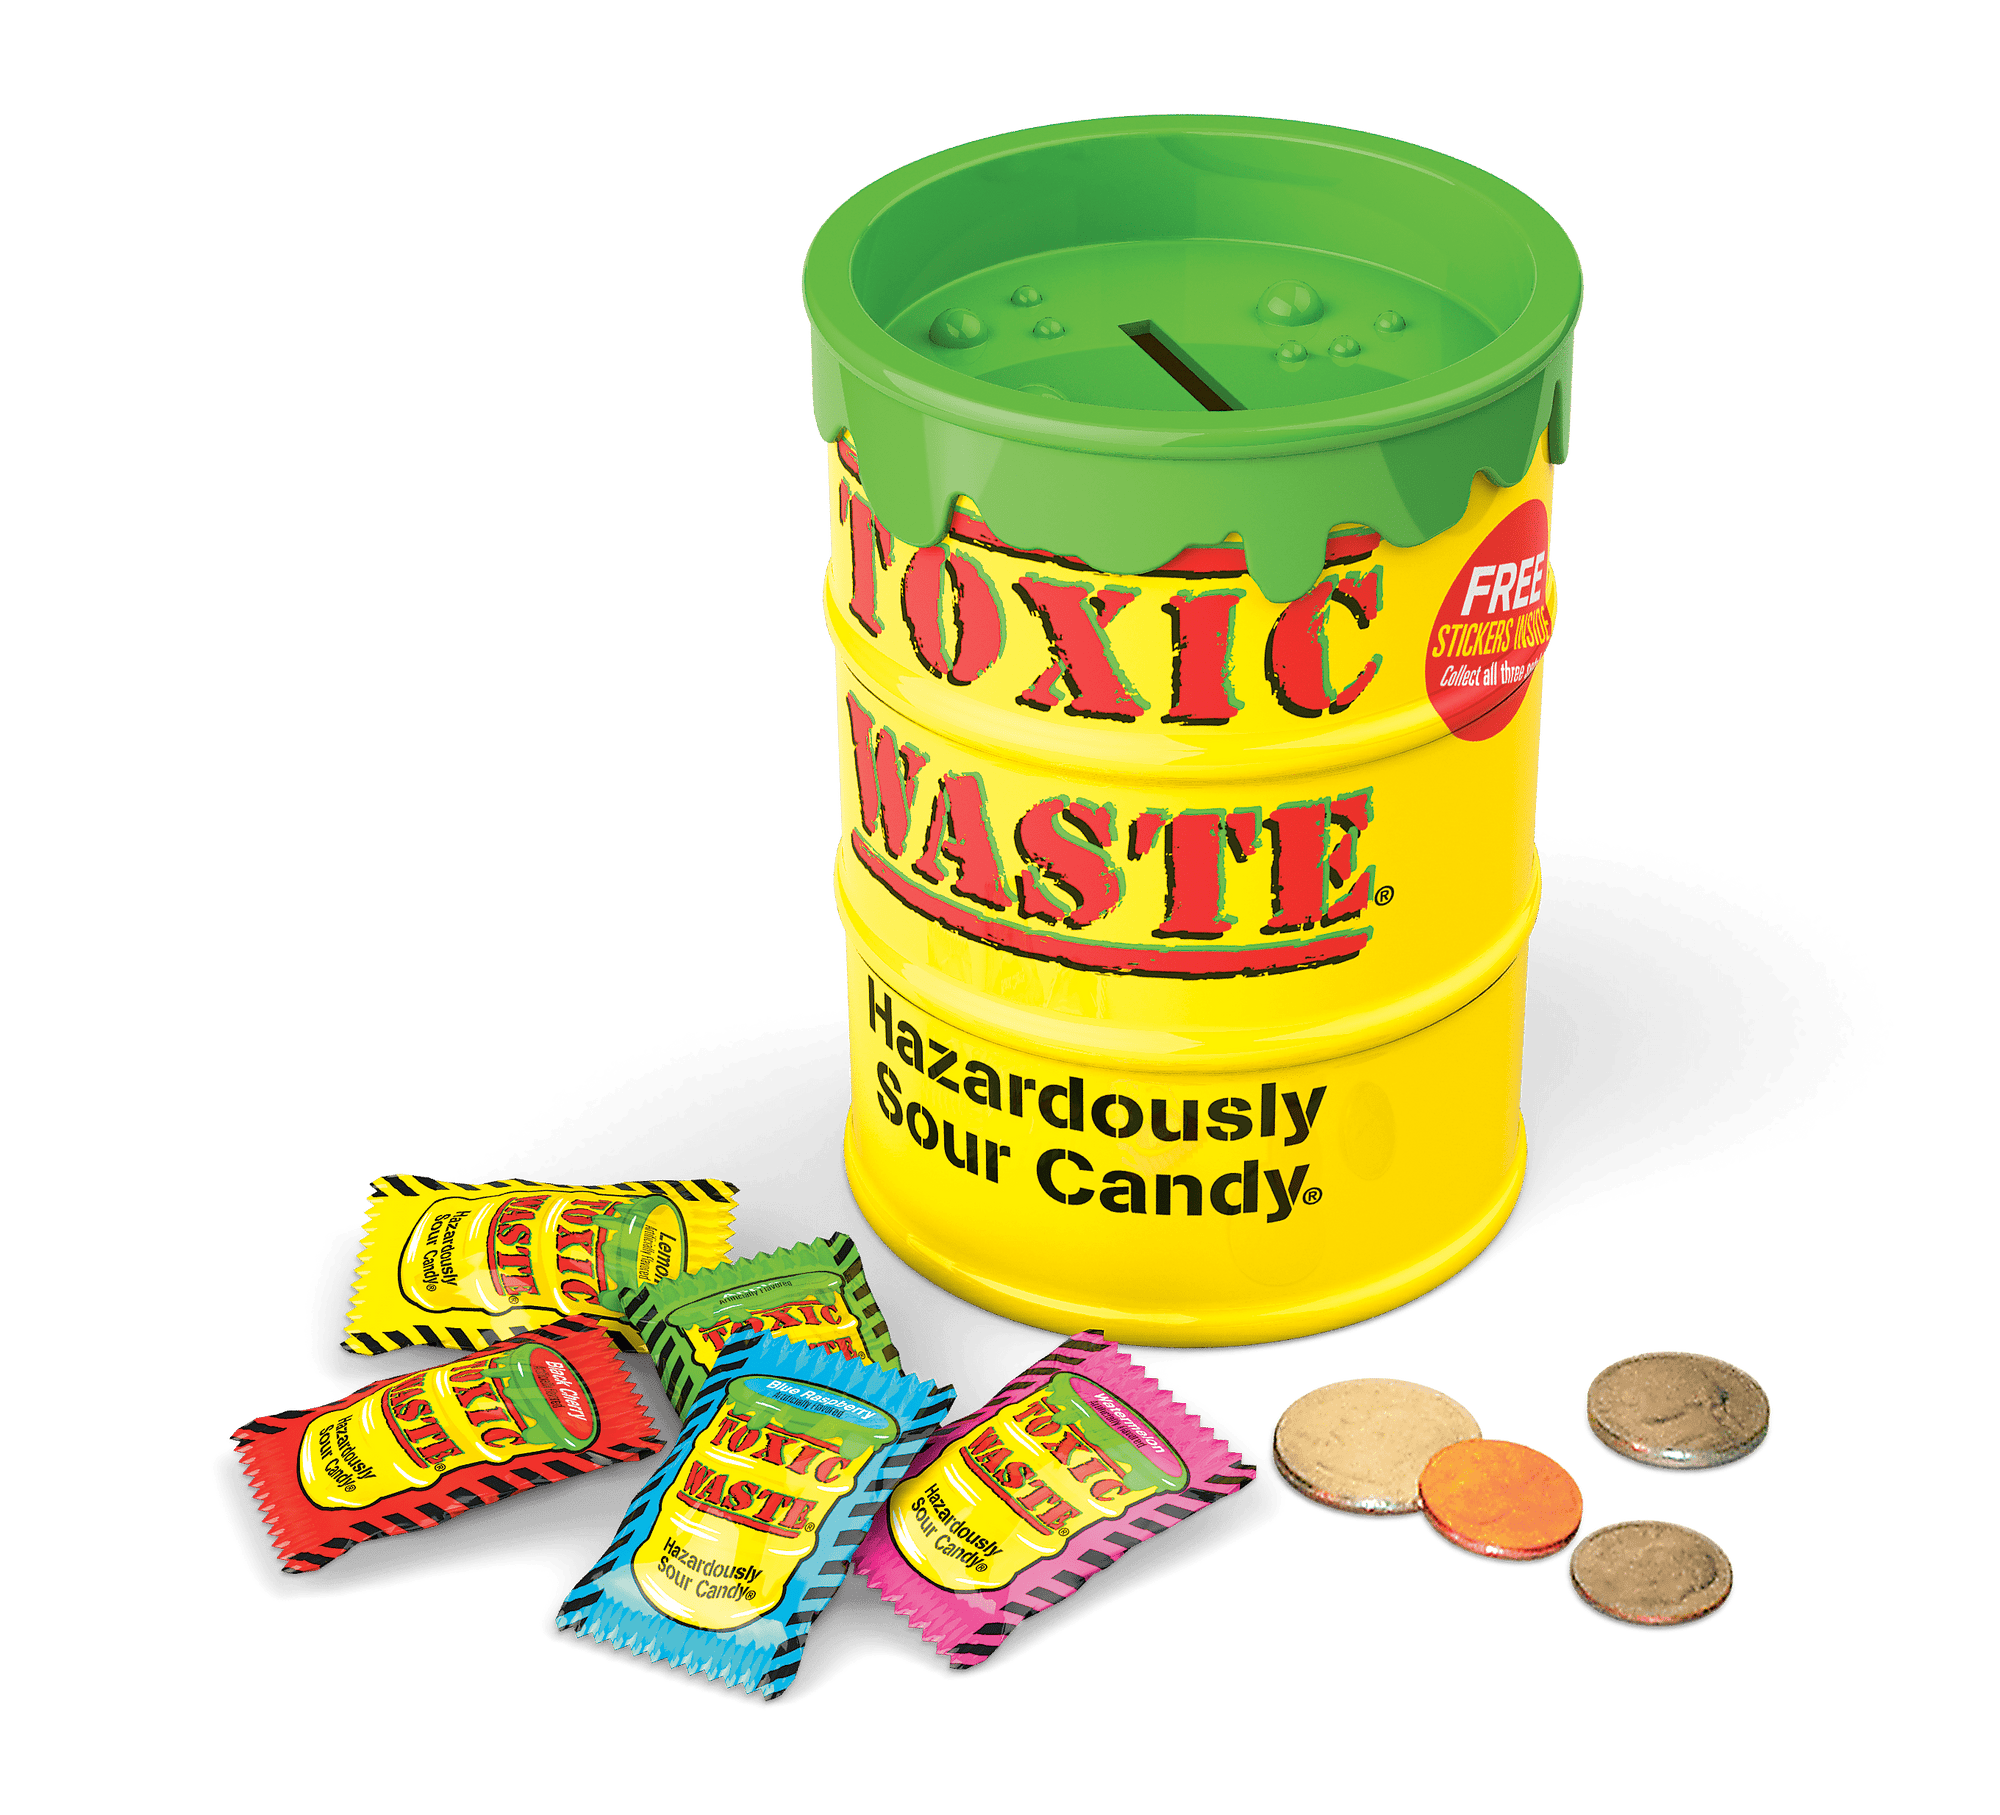 Toxic Waste Smog Balls Sour Candy - Buy Wholesale - CB Distributors